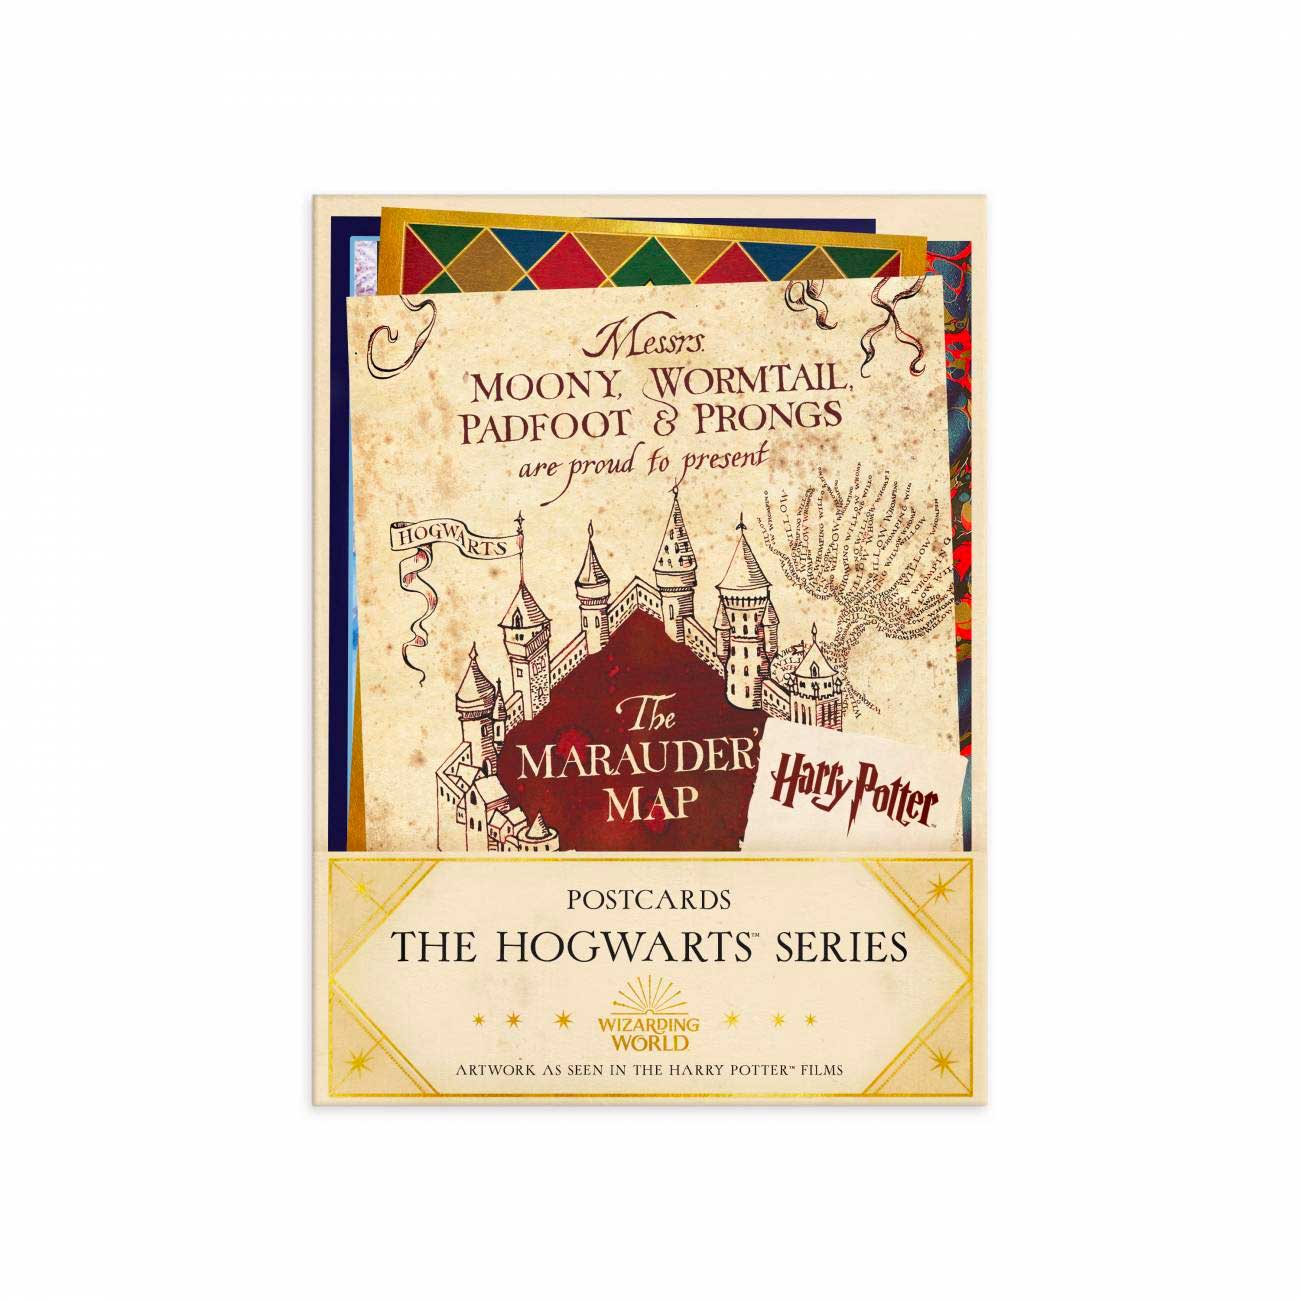 The Hogwarts Series Postcards